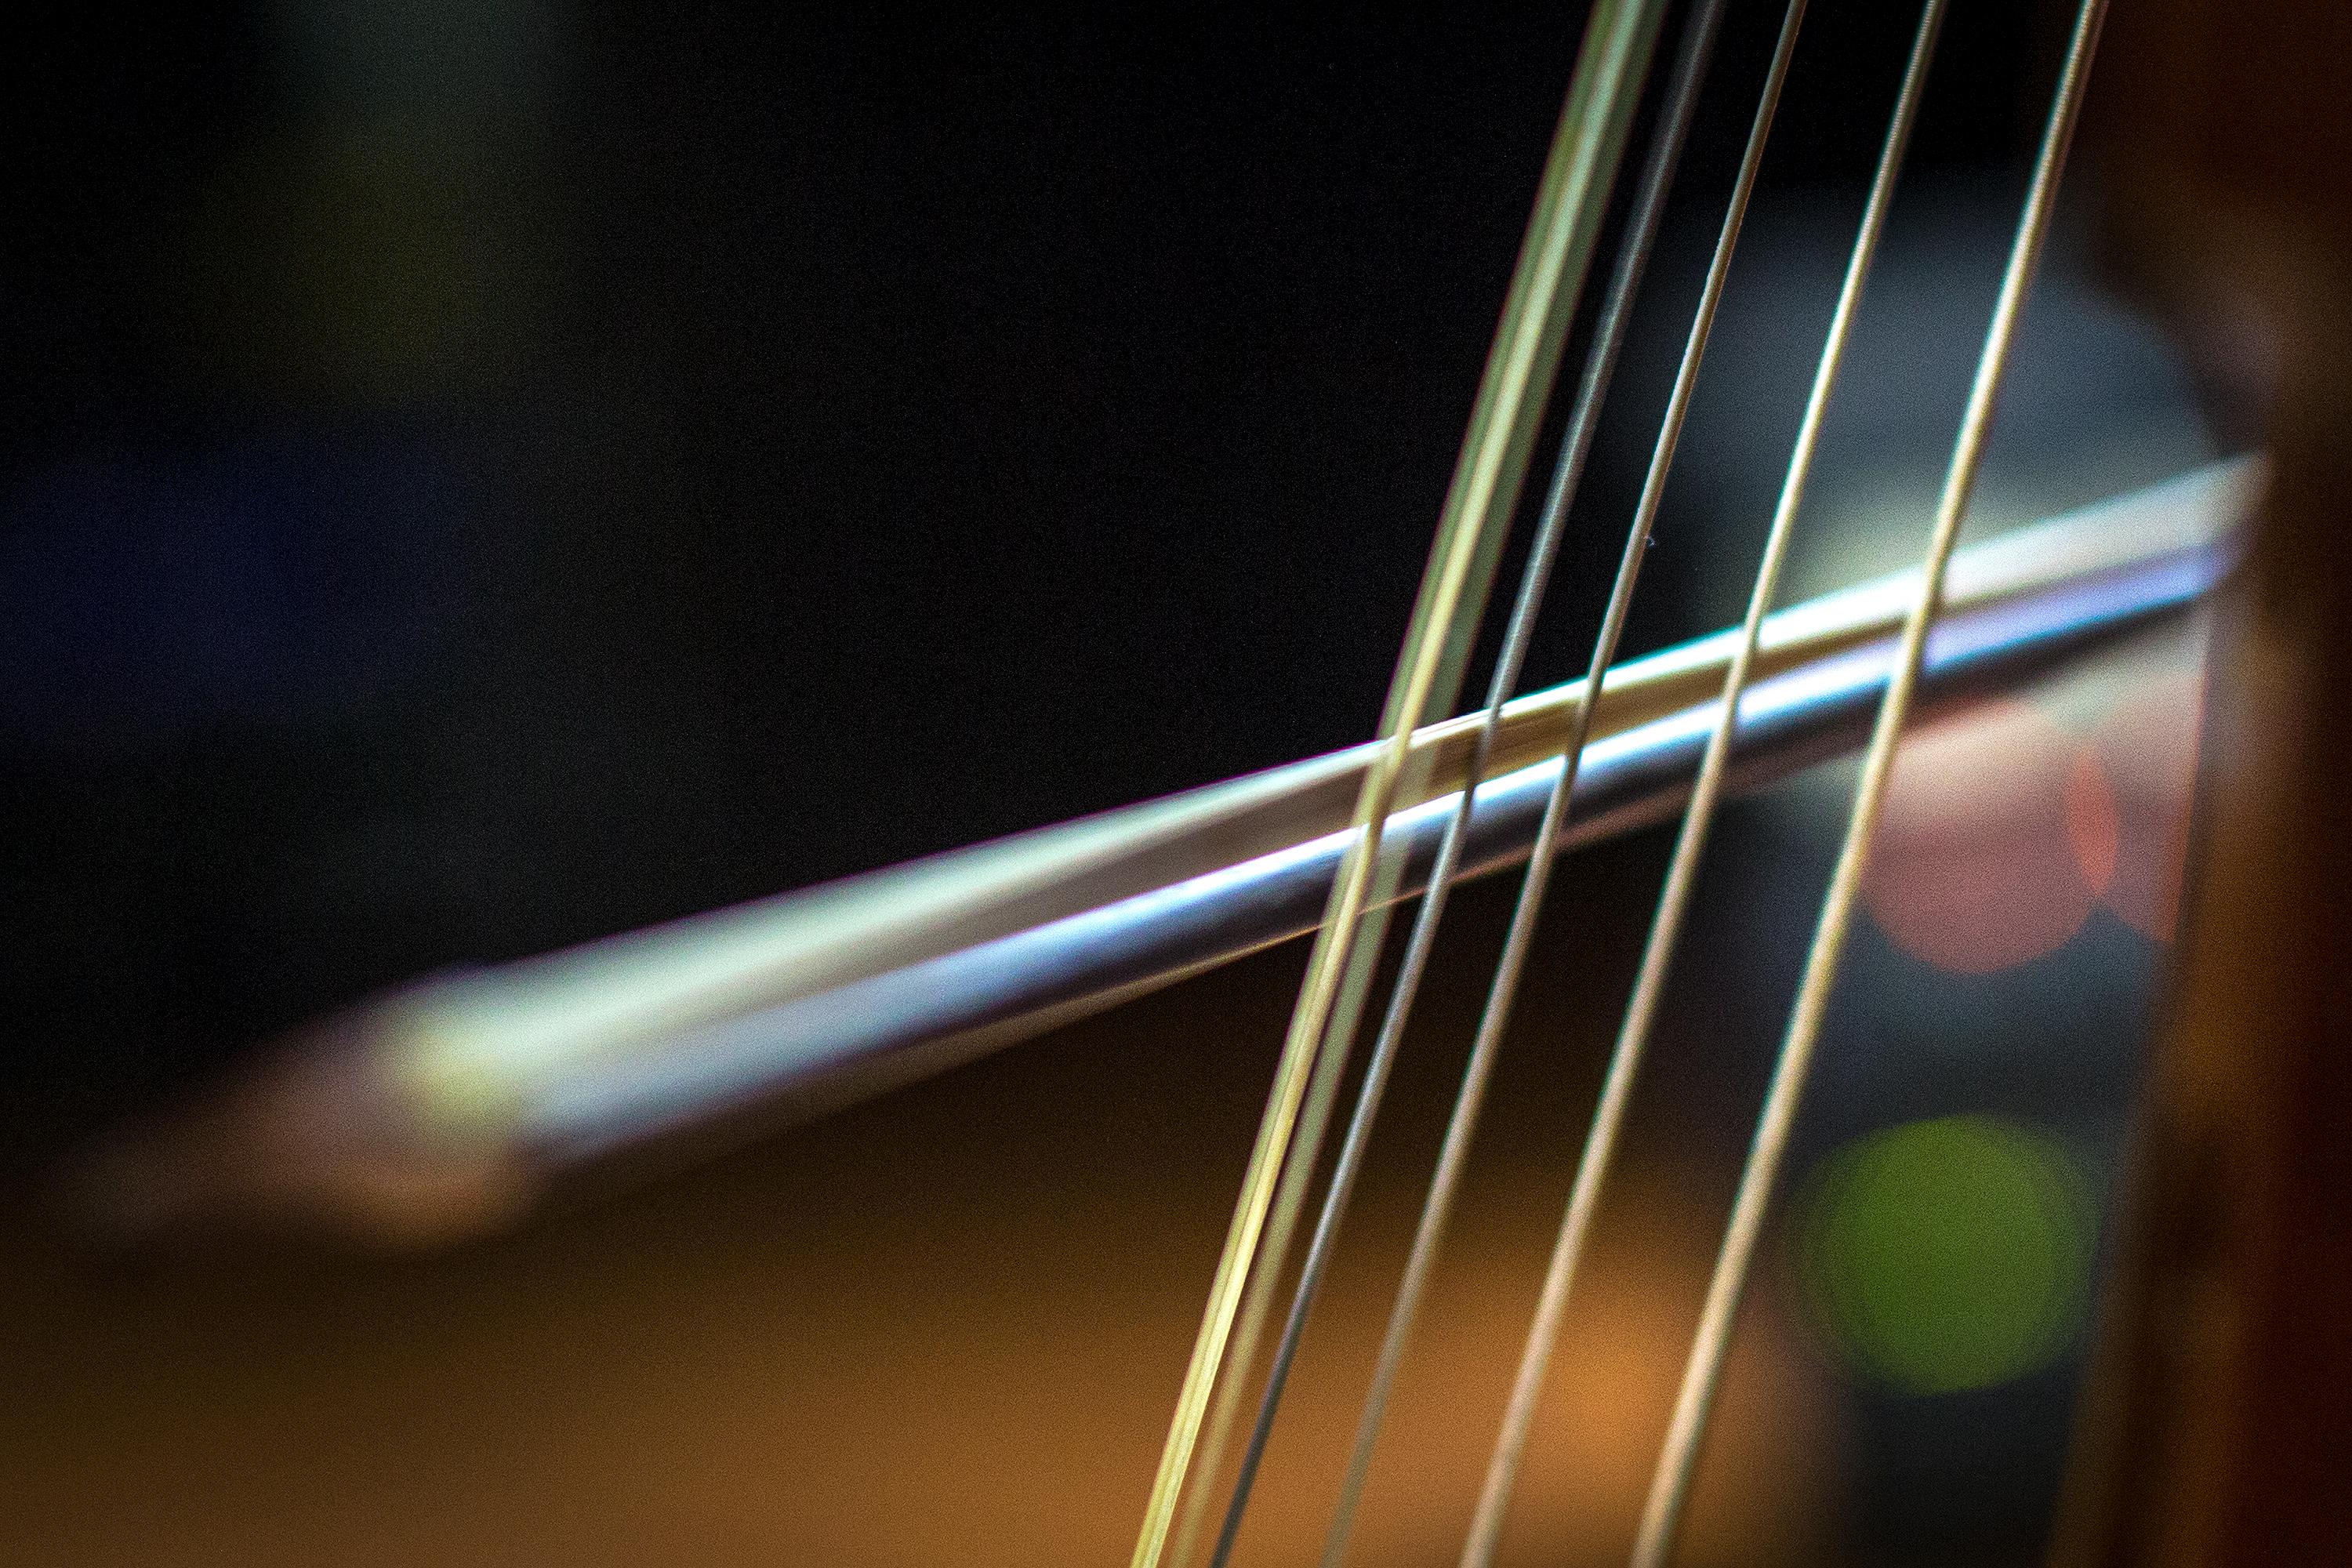 Photo: Closeup shot of string instrument